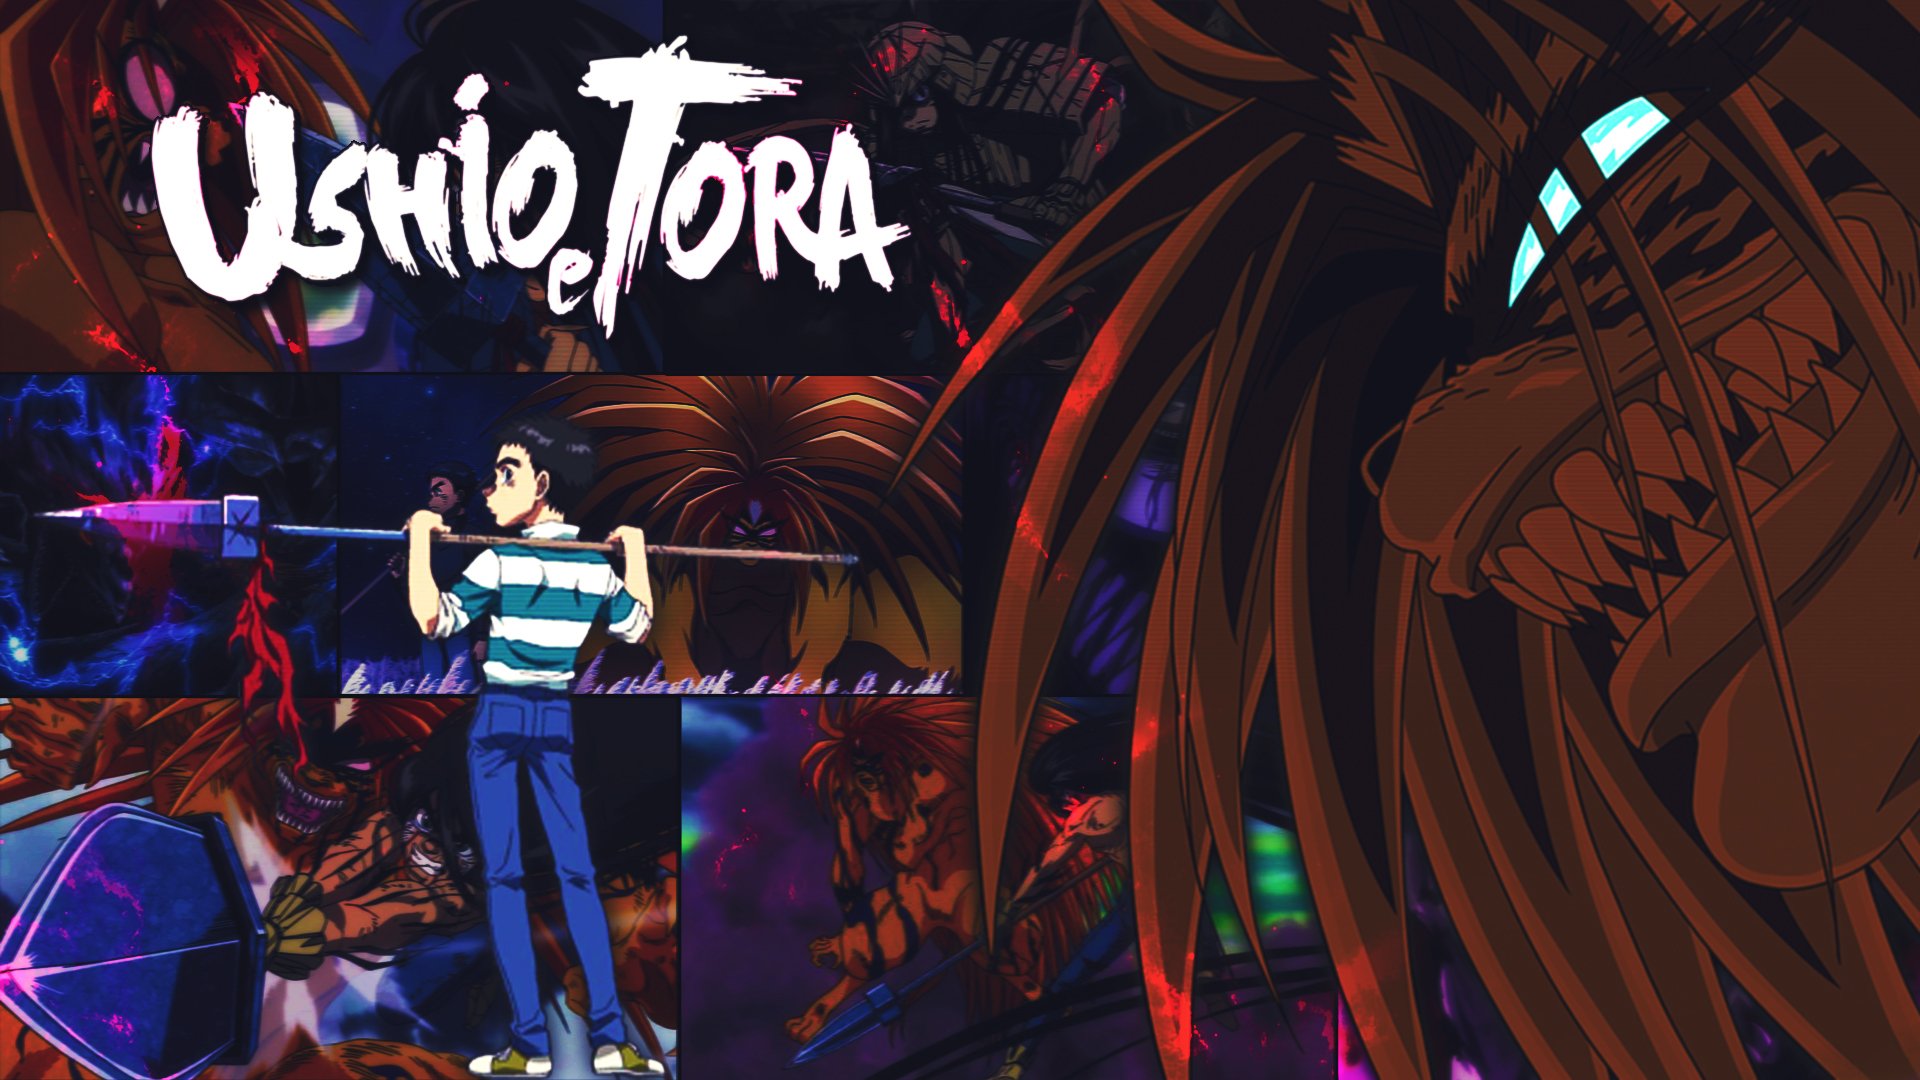 Ushio Tora HD Wallpaper Background Image